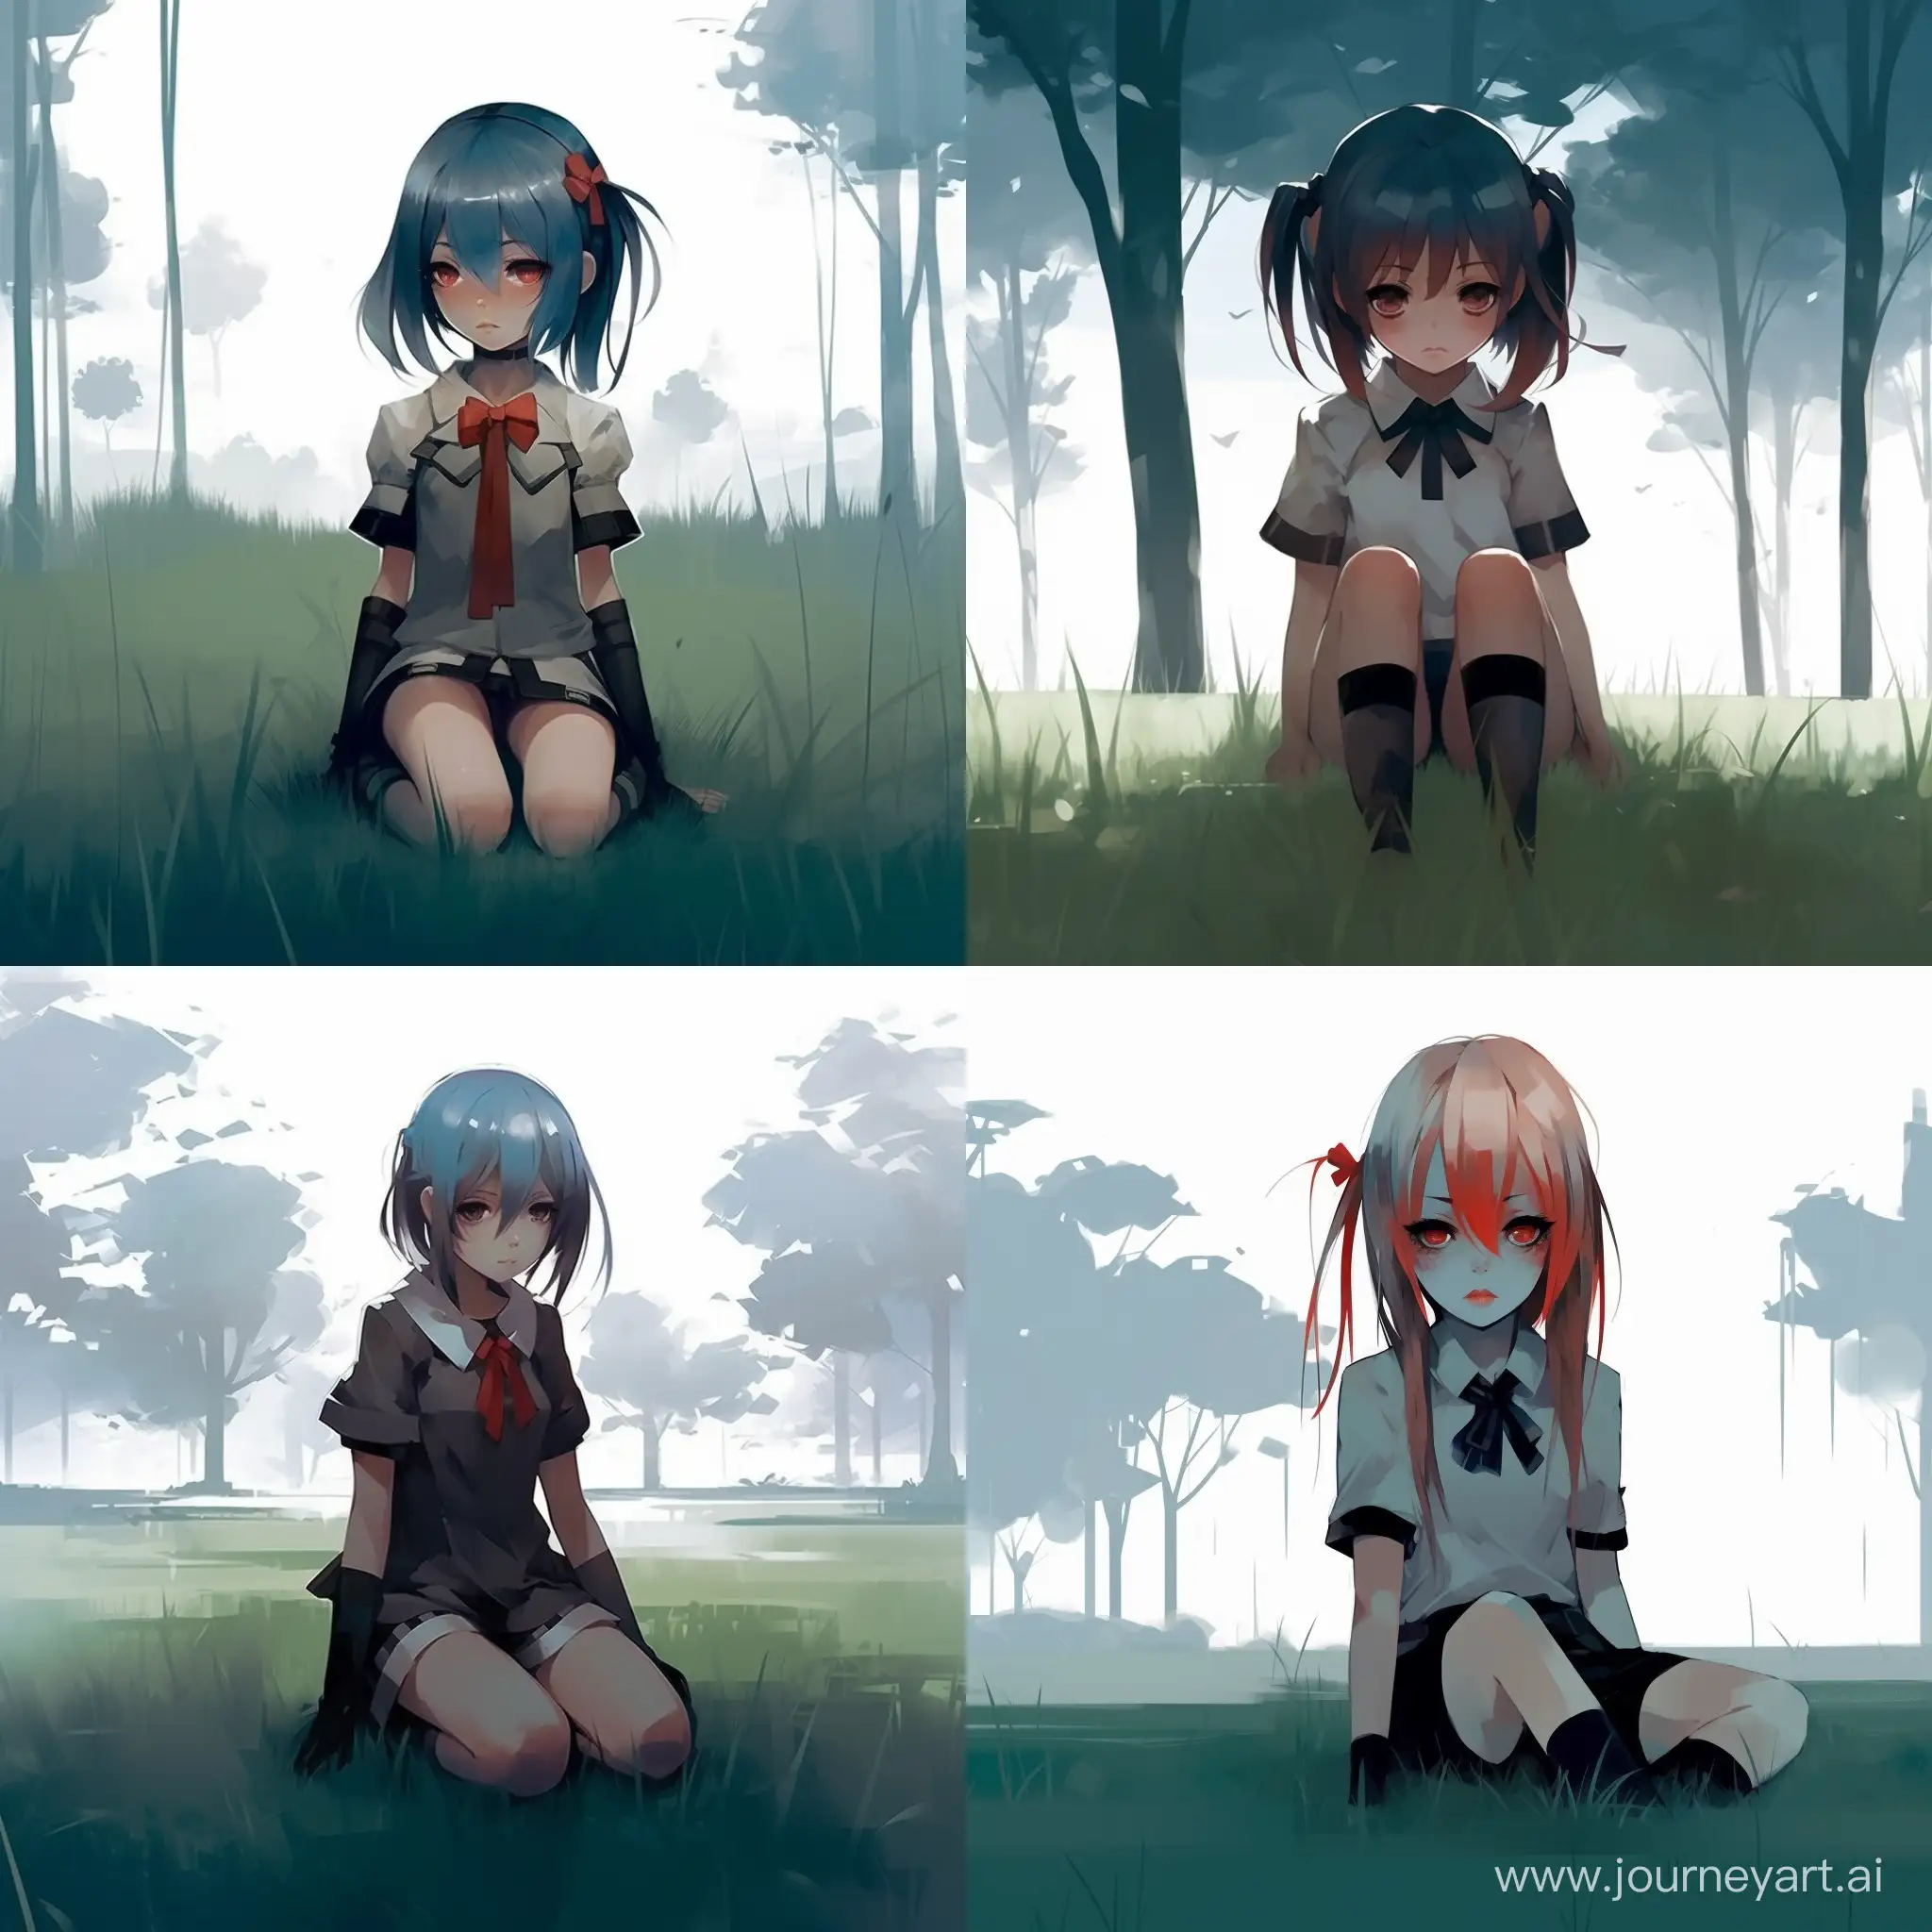 Anime-Girl-Sitting-on-Grass-by-Rafael-Albuquerque